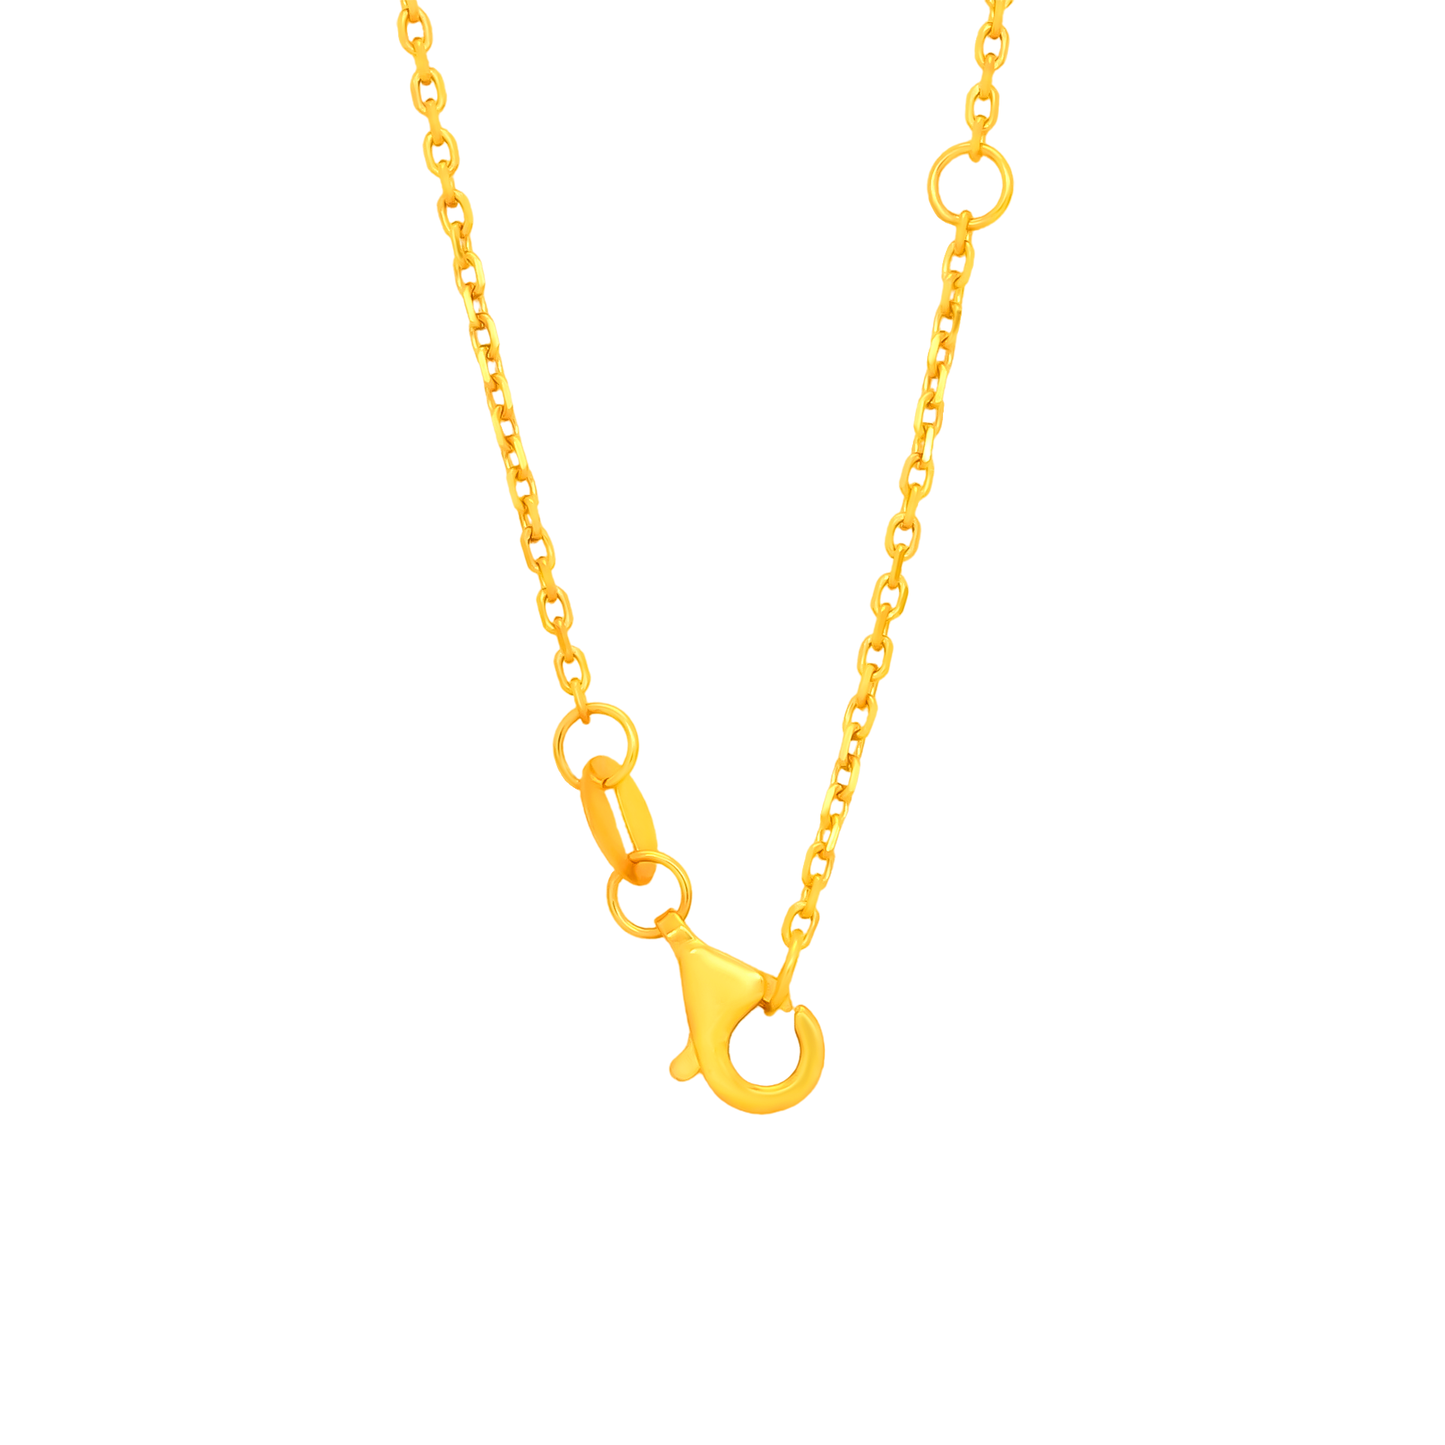 TAKA Jewellery 916 Gold Necklace